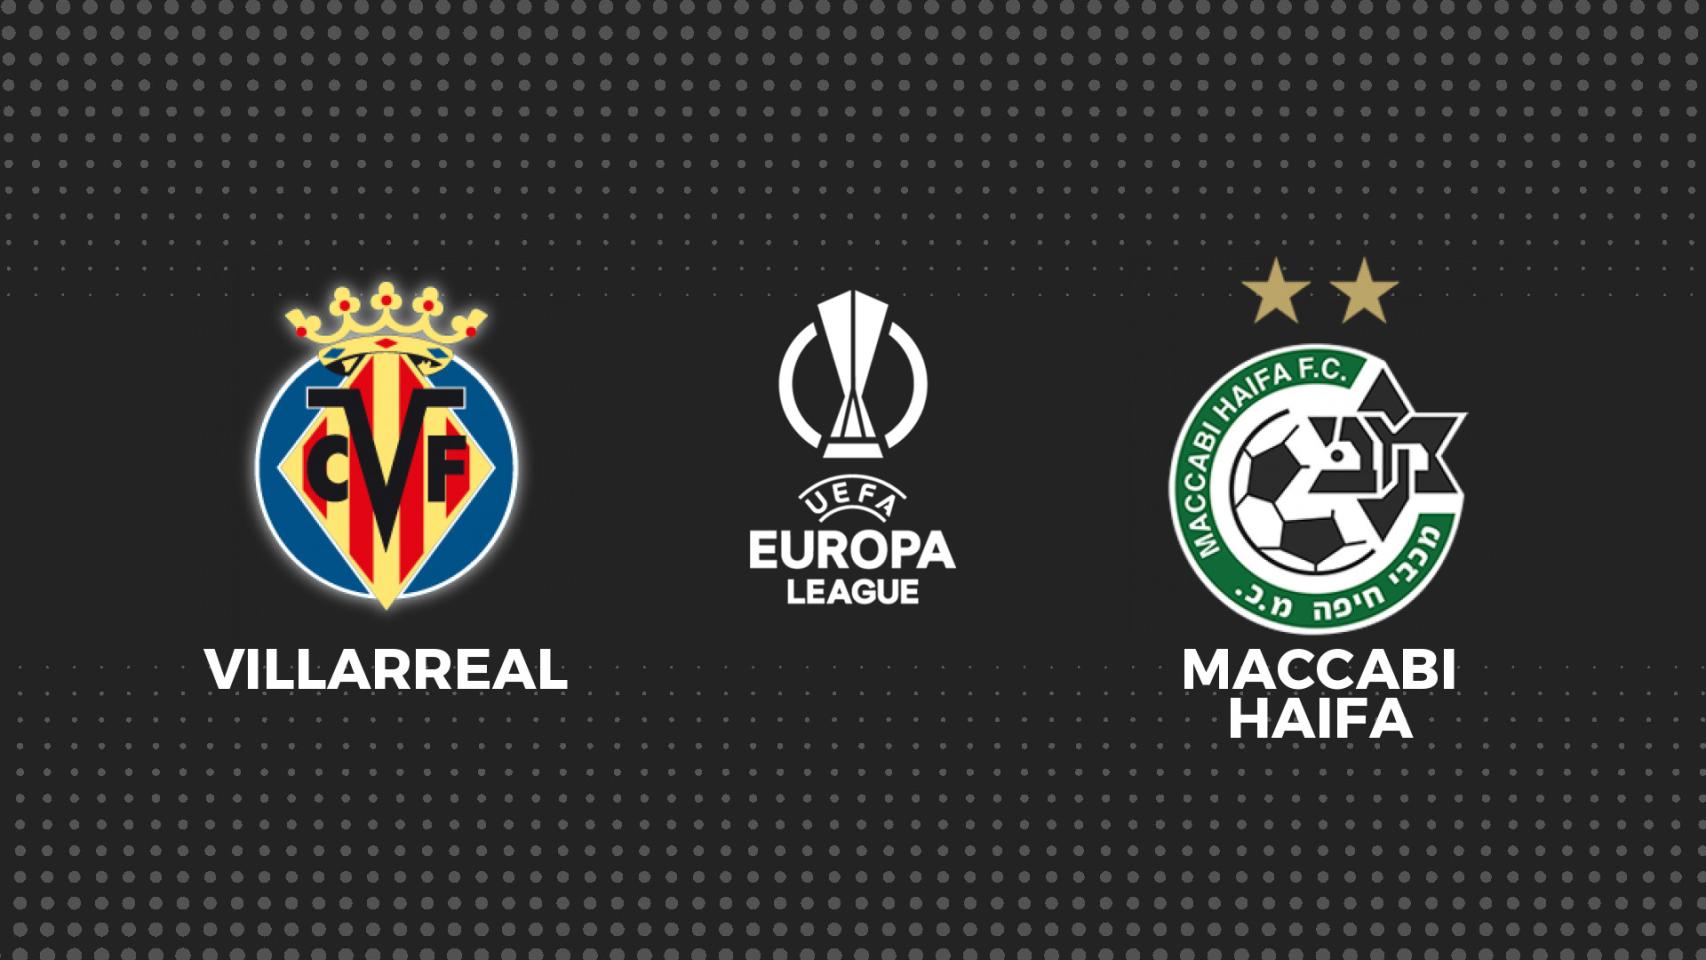 Villarreal - Maccabi Haifa, fútbol en directo